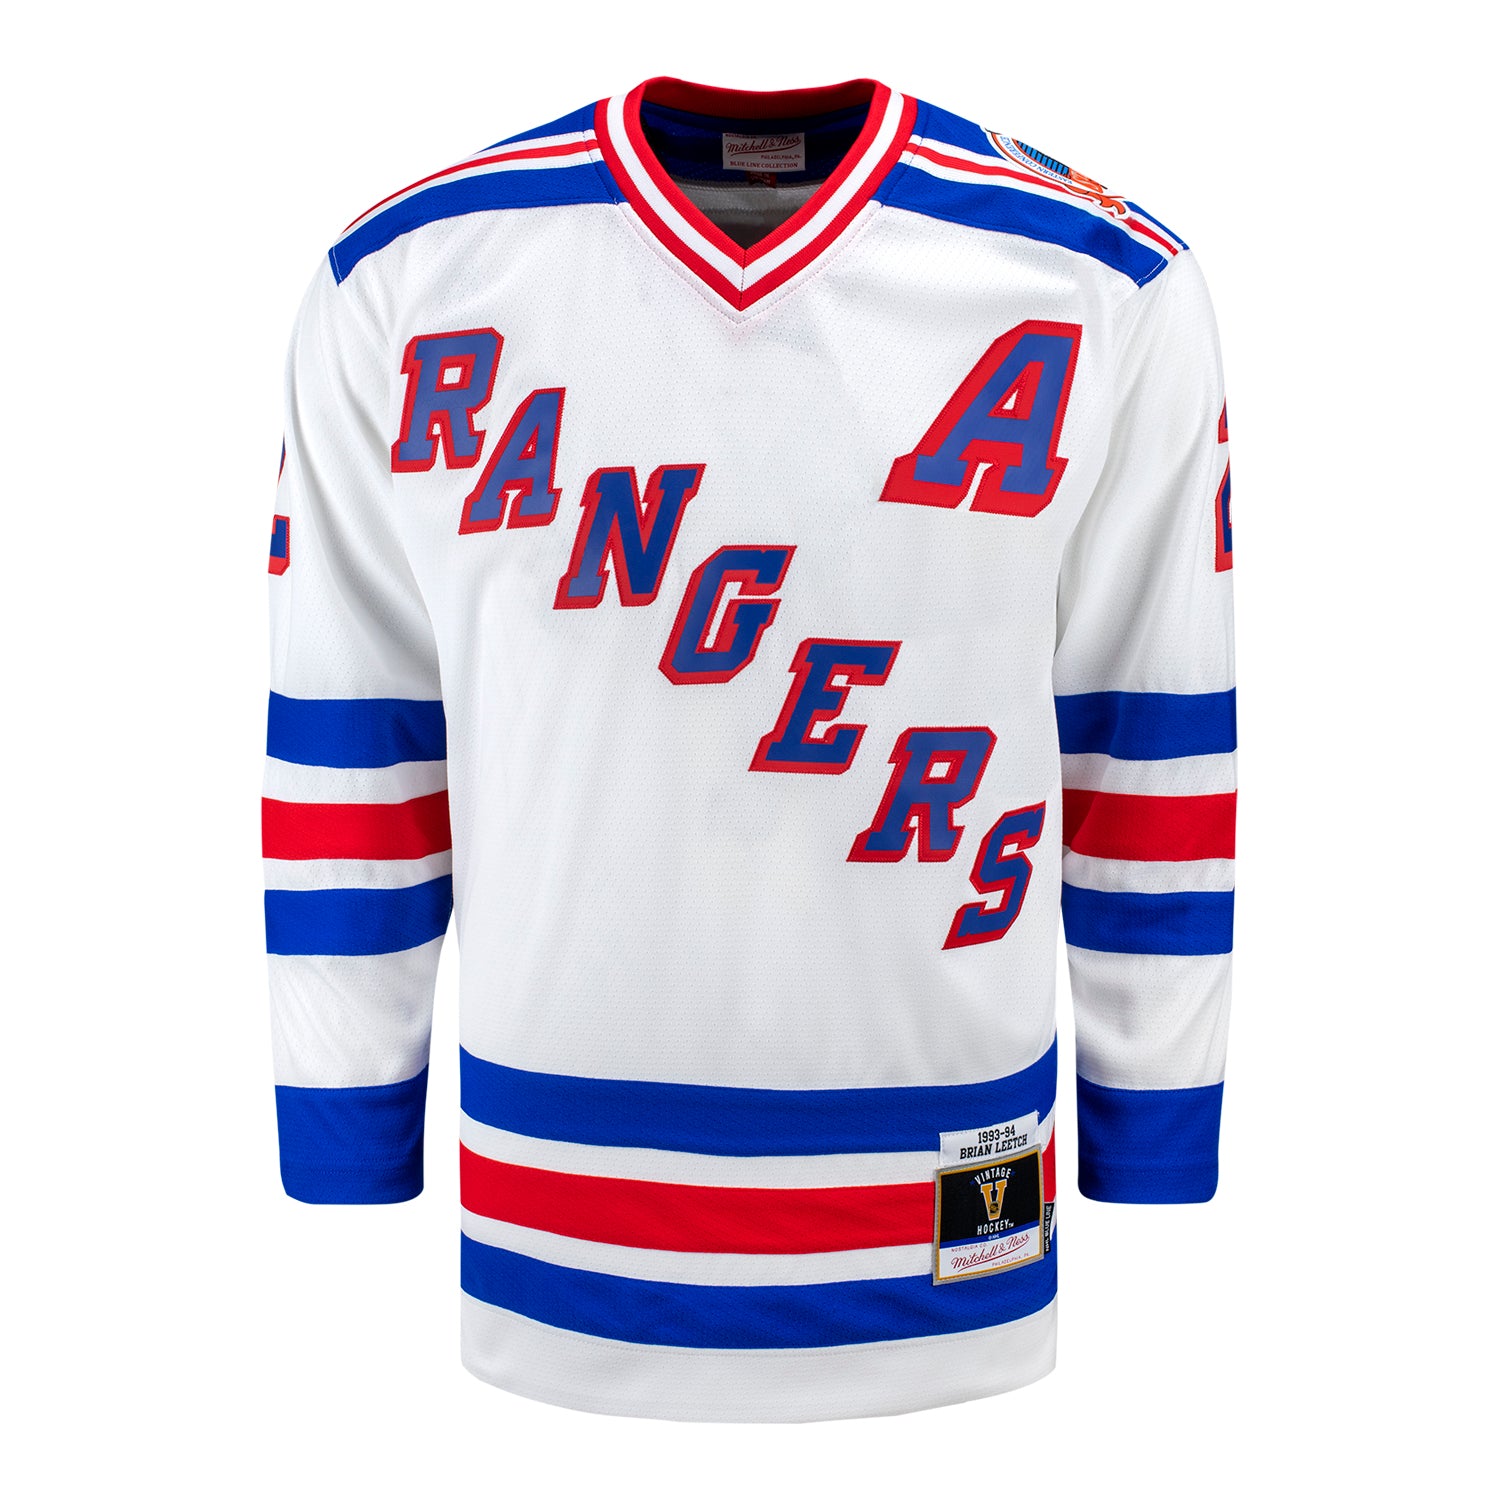 WinCraft 3208529892 NHL New York Rangers Can Cooler Vintage Design